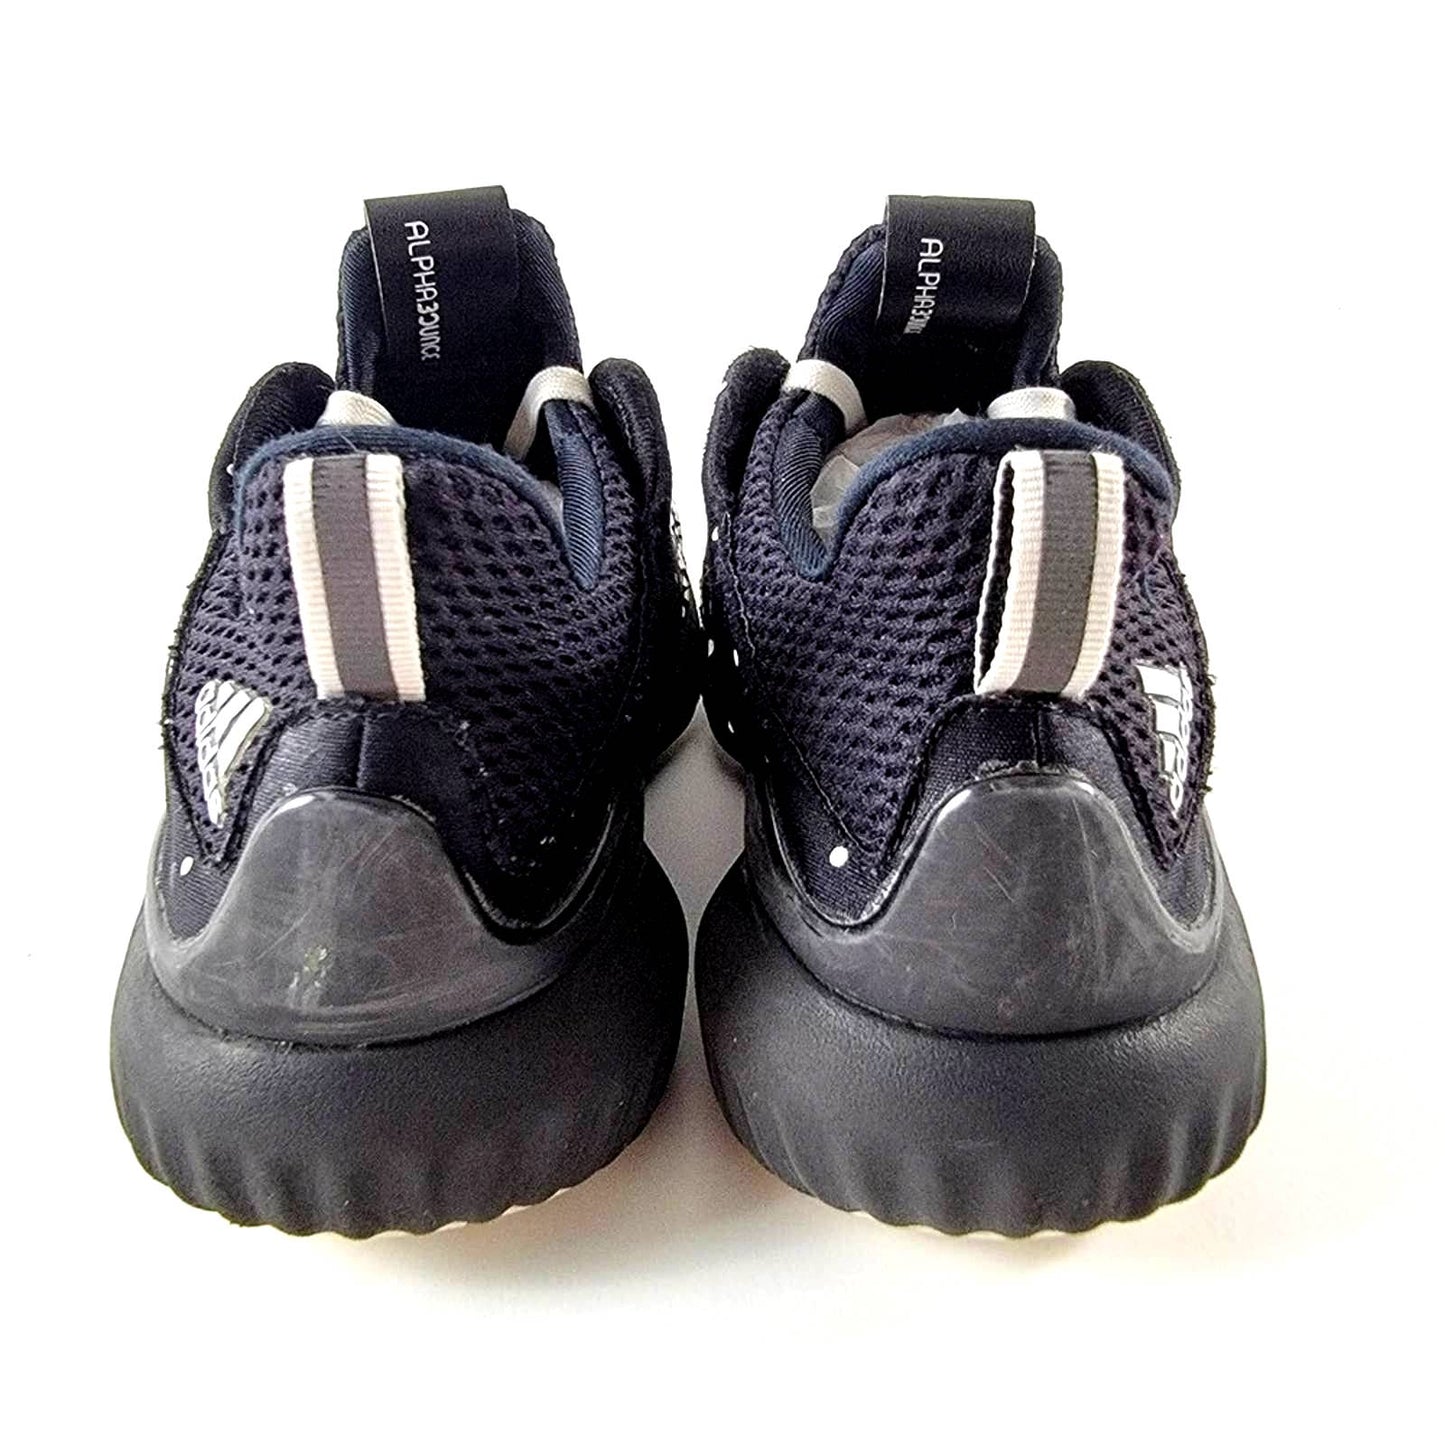 Adidas AlphaBounce J Running Shoes - 5.5